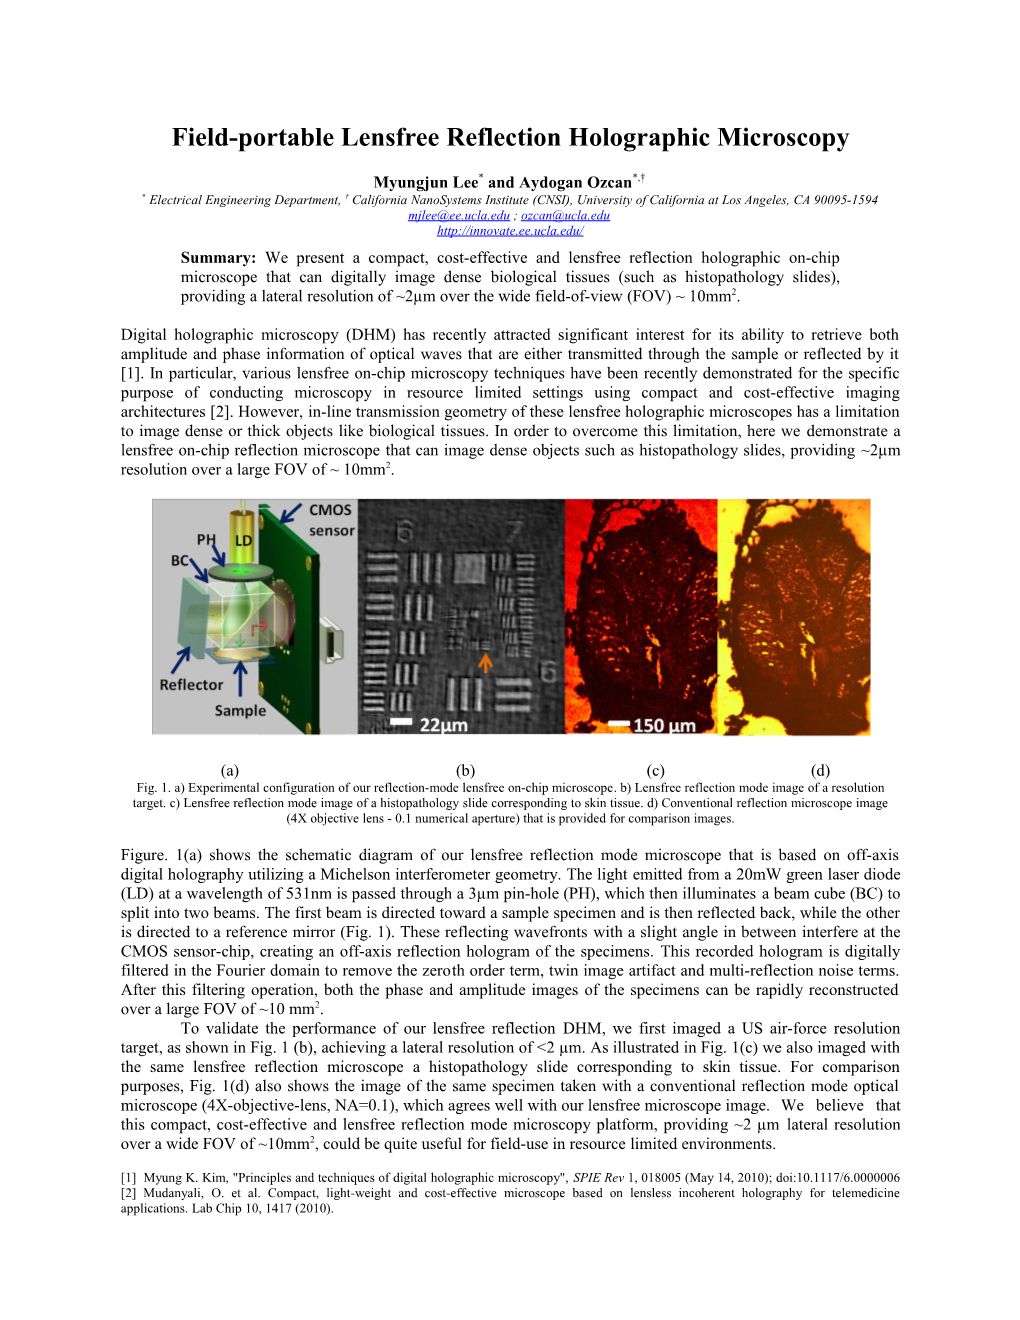 Field-Portablelensfree Reflection Holographic Microscopy